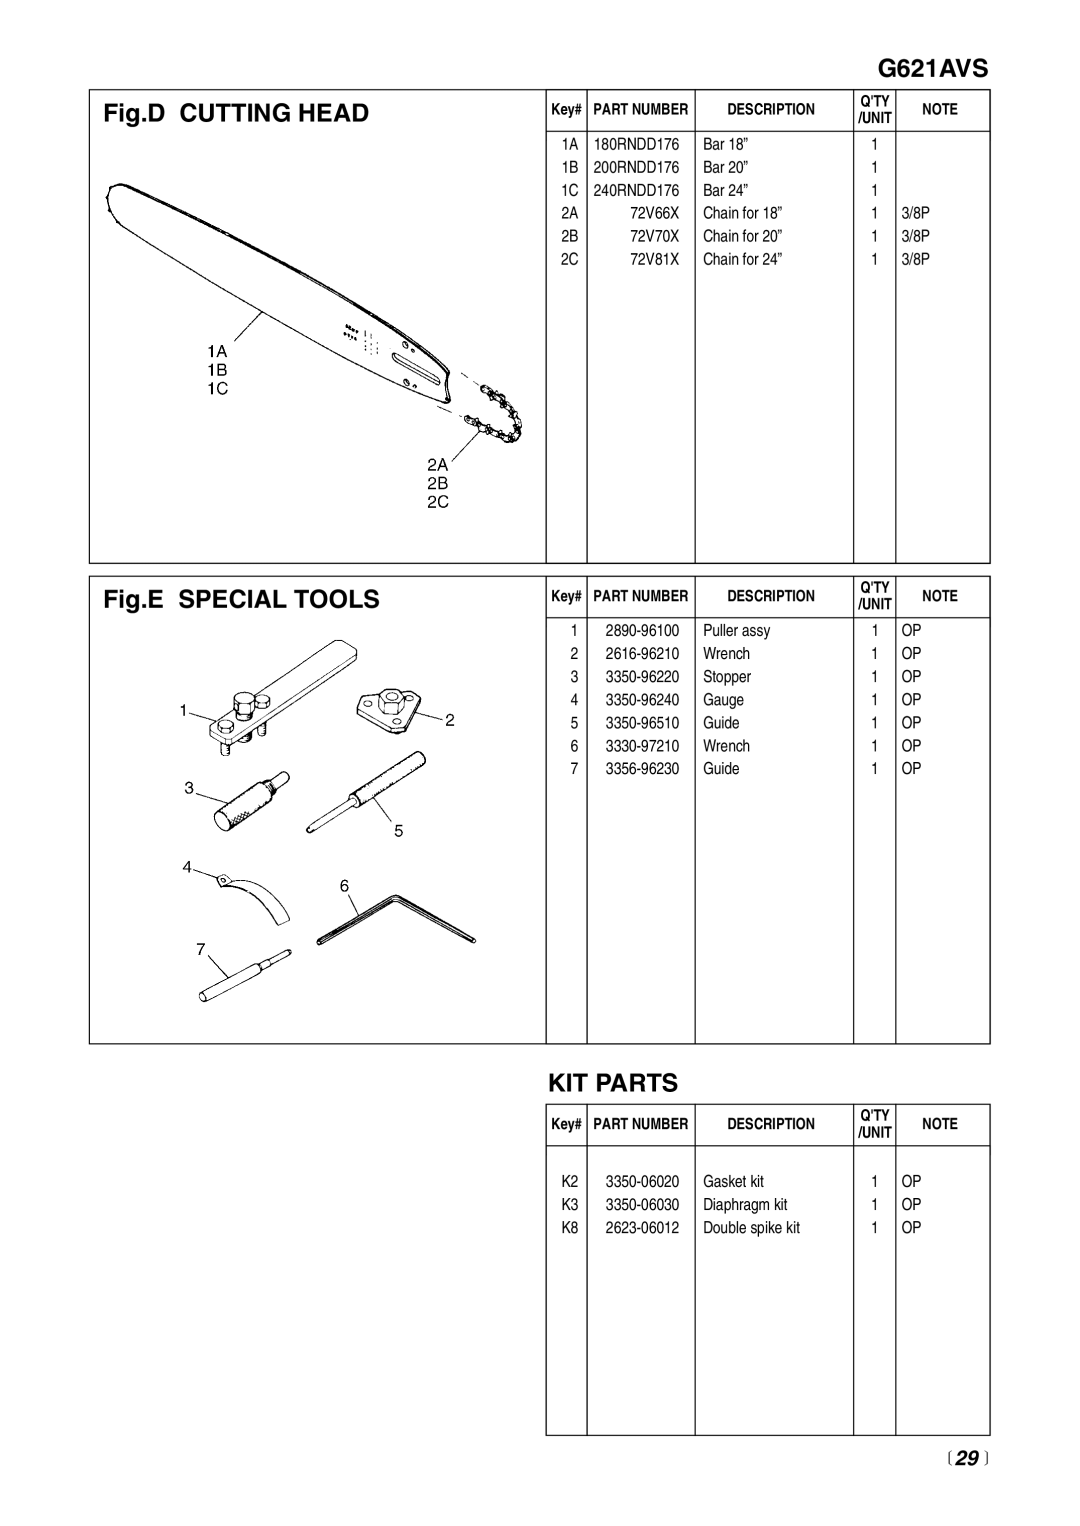 RedMax G621AVS manual Fig.D CUTTING HEAD, Fig.E SPECIAL TOOLS, Kit Parts,  29  